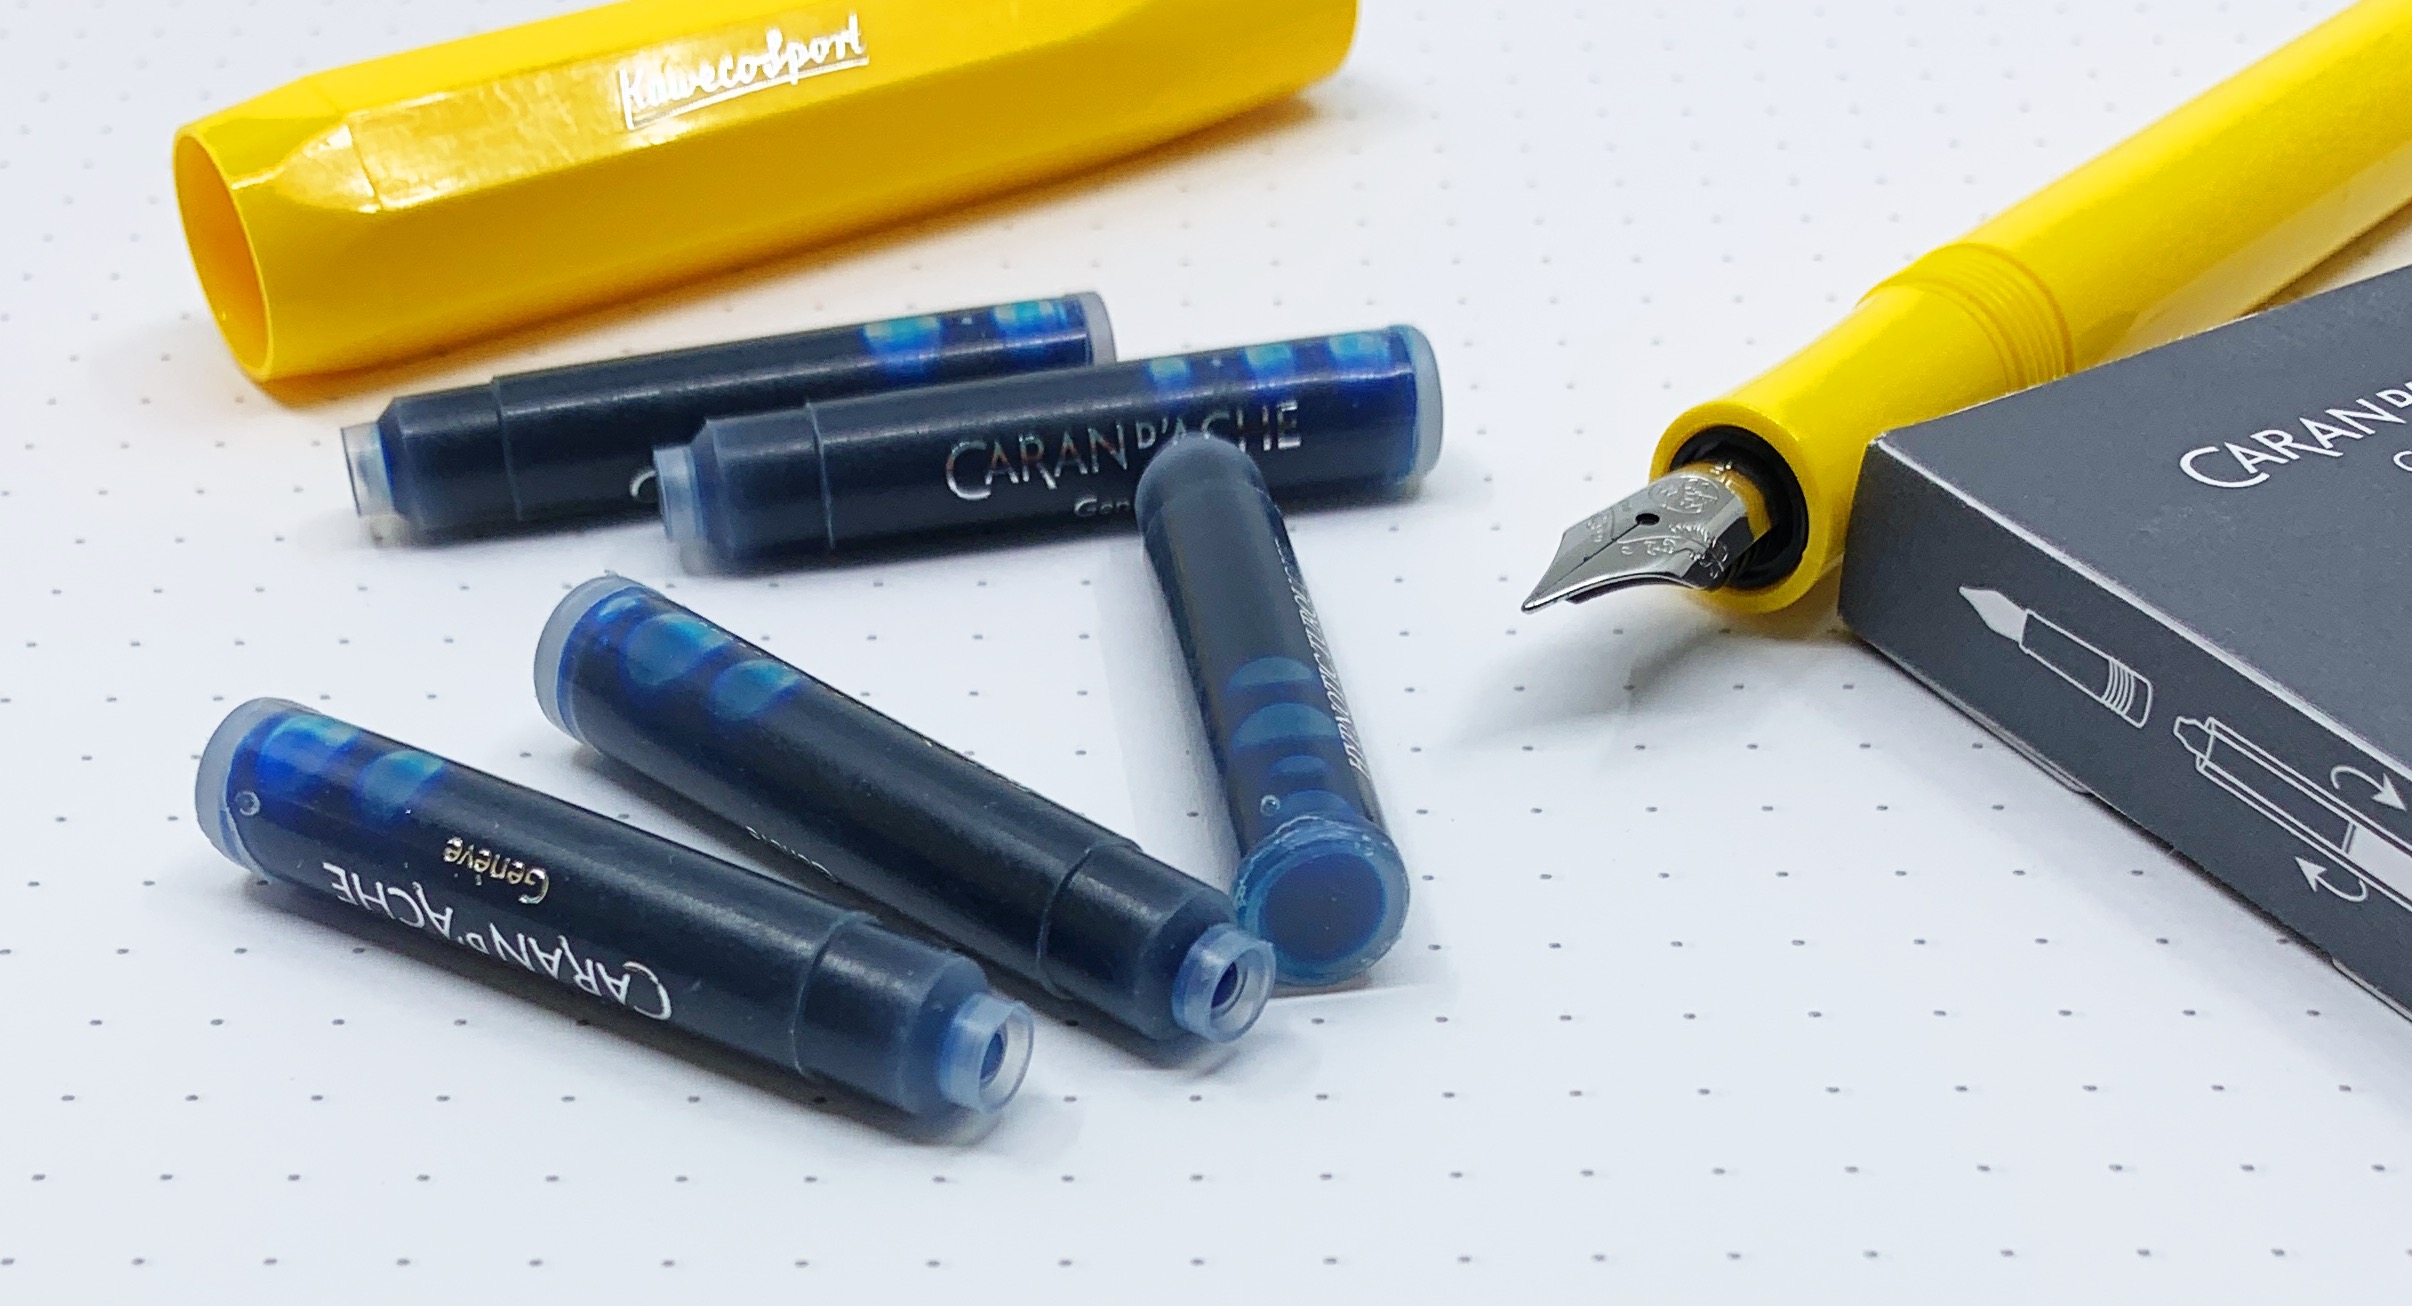 Office Depot Brand Felt Tip Porous Pens Medium Point 1.0 mm Black